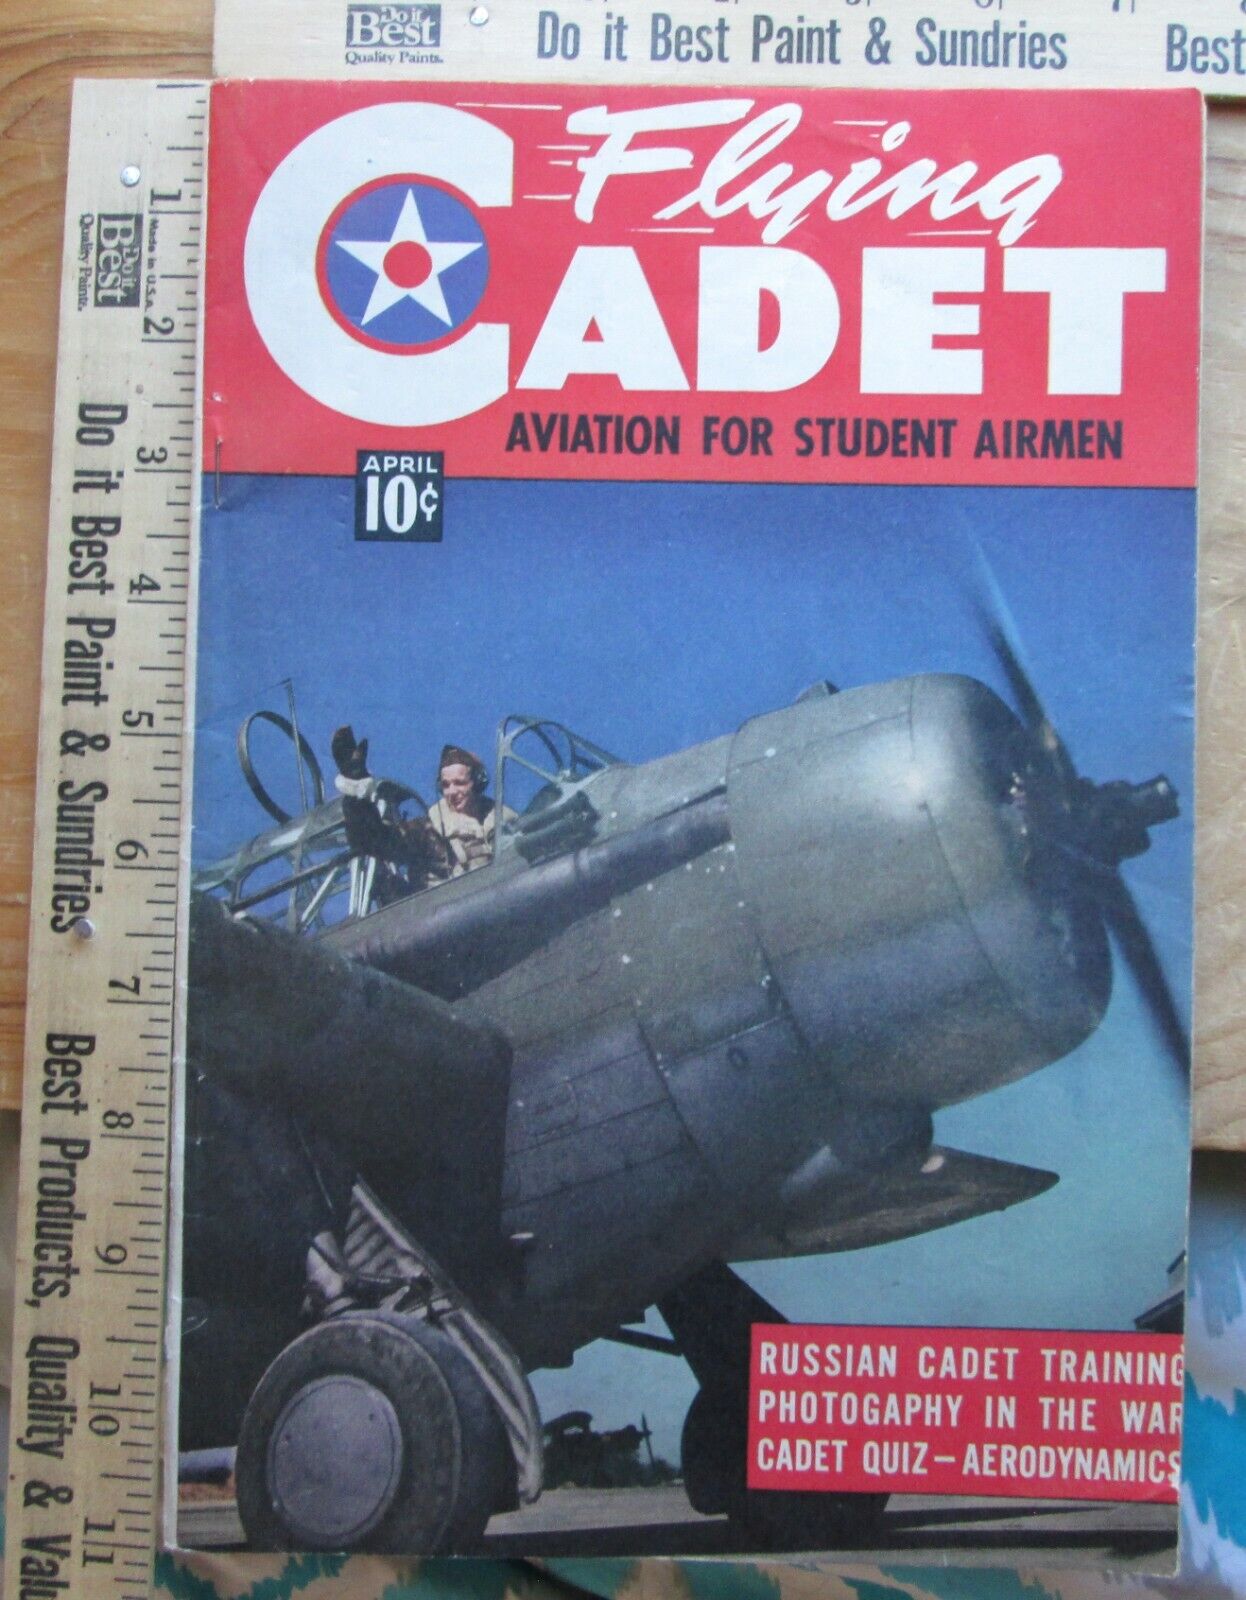 Flying Cadet Aviation for Student Airmen Vol. 1 #3 August 1943